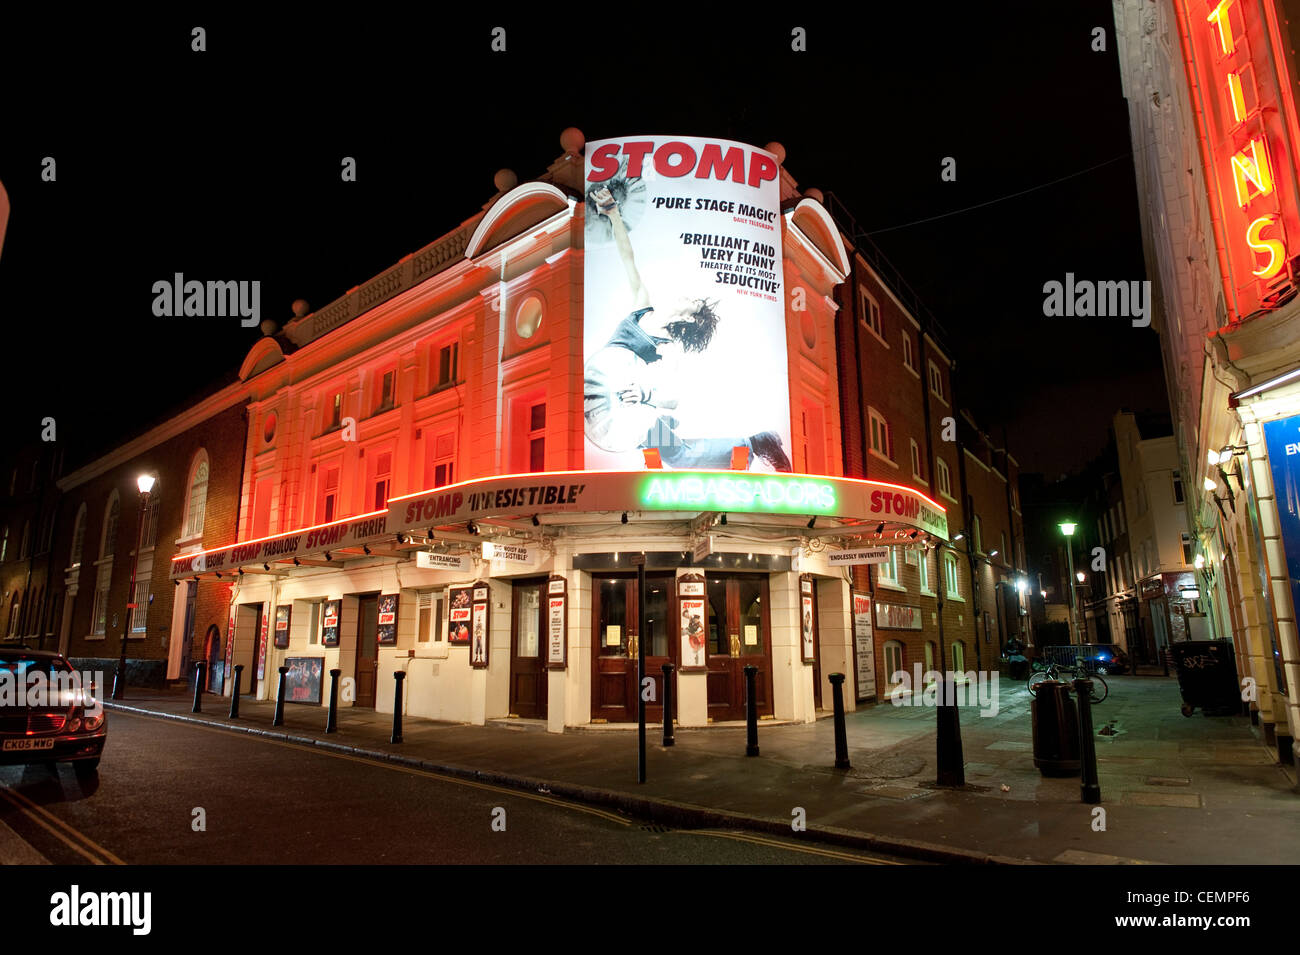 Stomp Ambassadors Theatre London nightlife theatreland Stock Photo